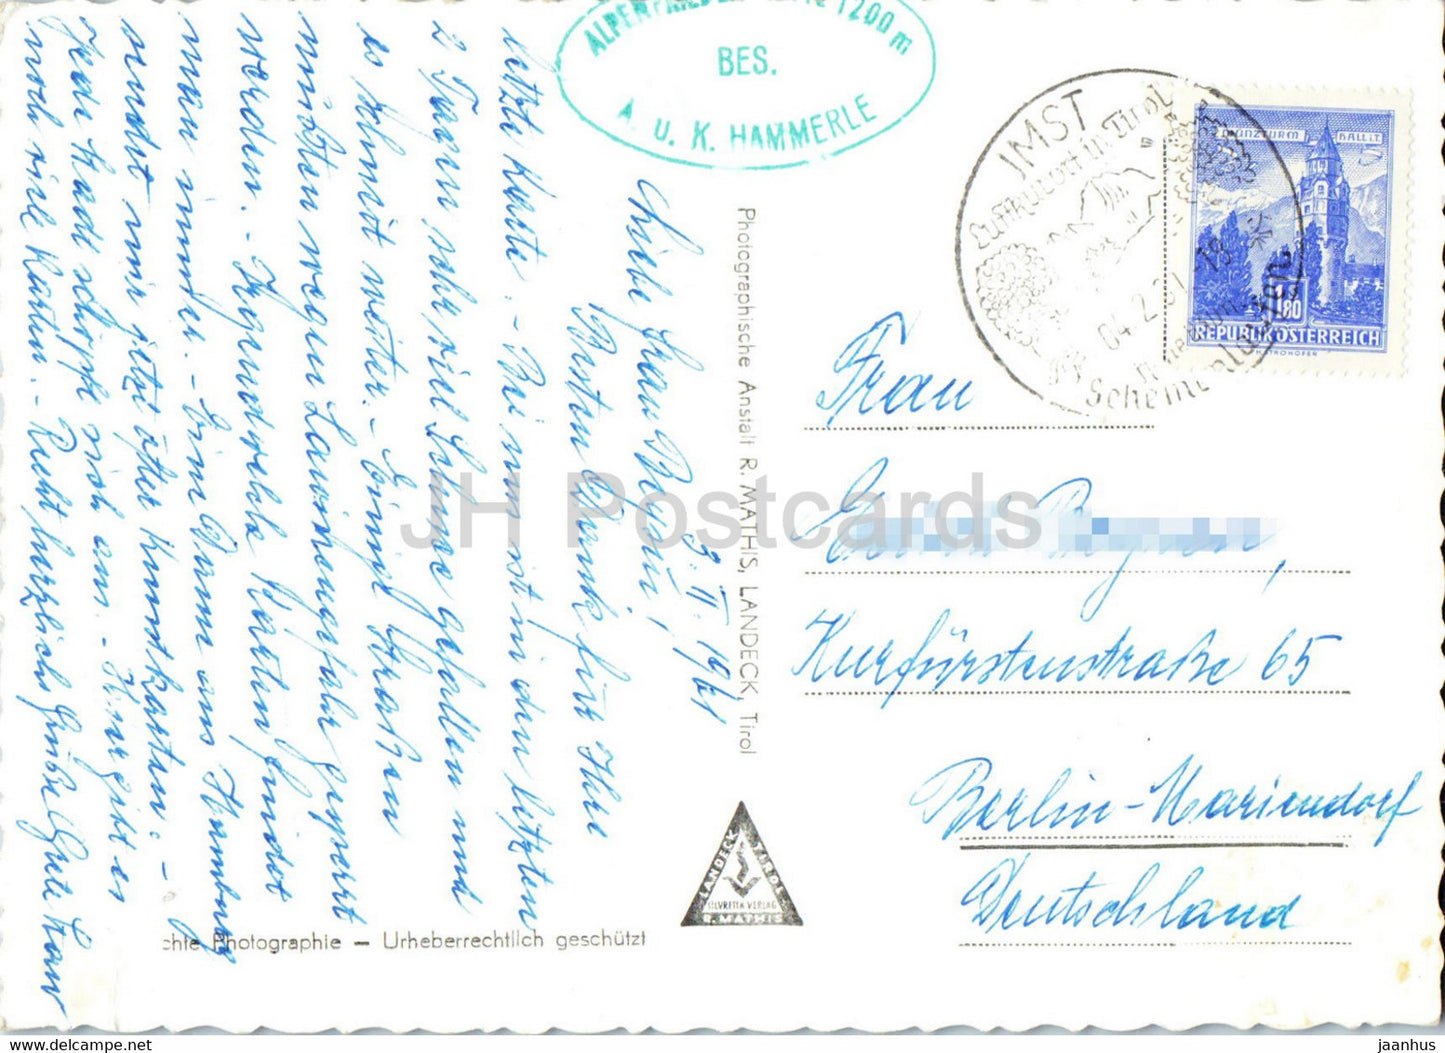 Hammerlehutte mit Miemingergruppe u Kronburg - Tirol - carte postale ancienne - 1961 - Autriche - utilisé